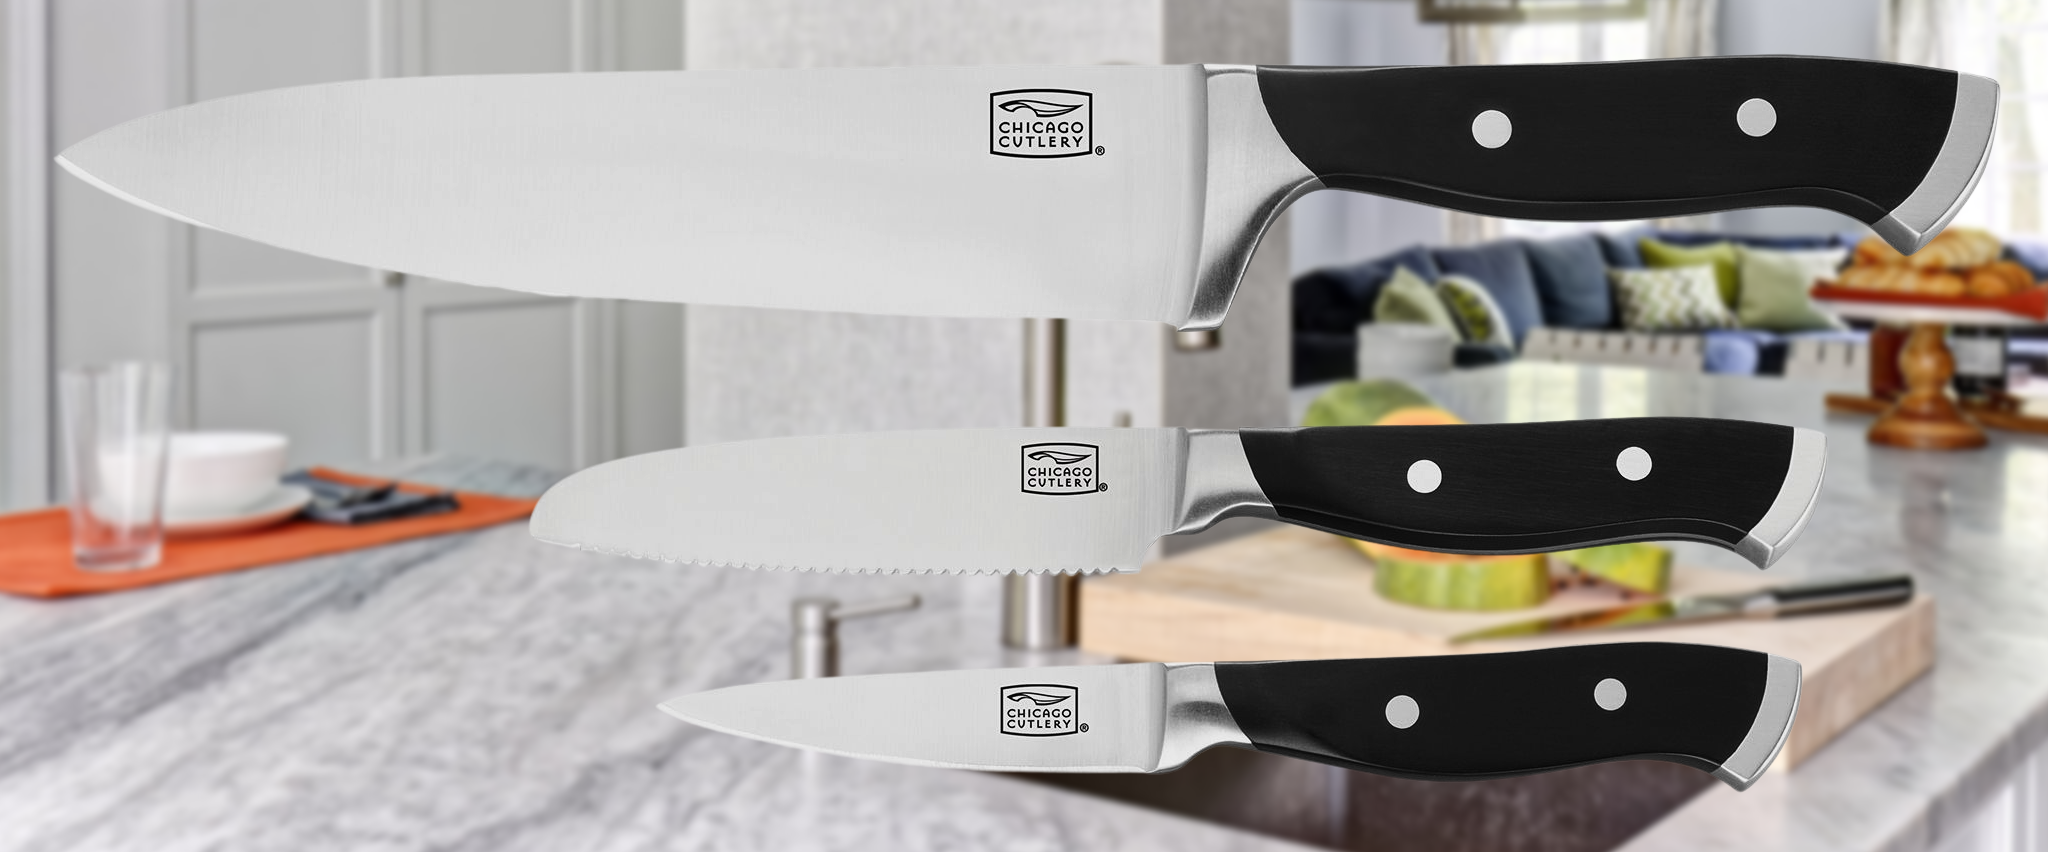 Armitage 3-Piece Chicago Cutlery Knife Set